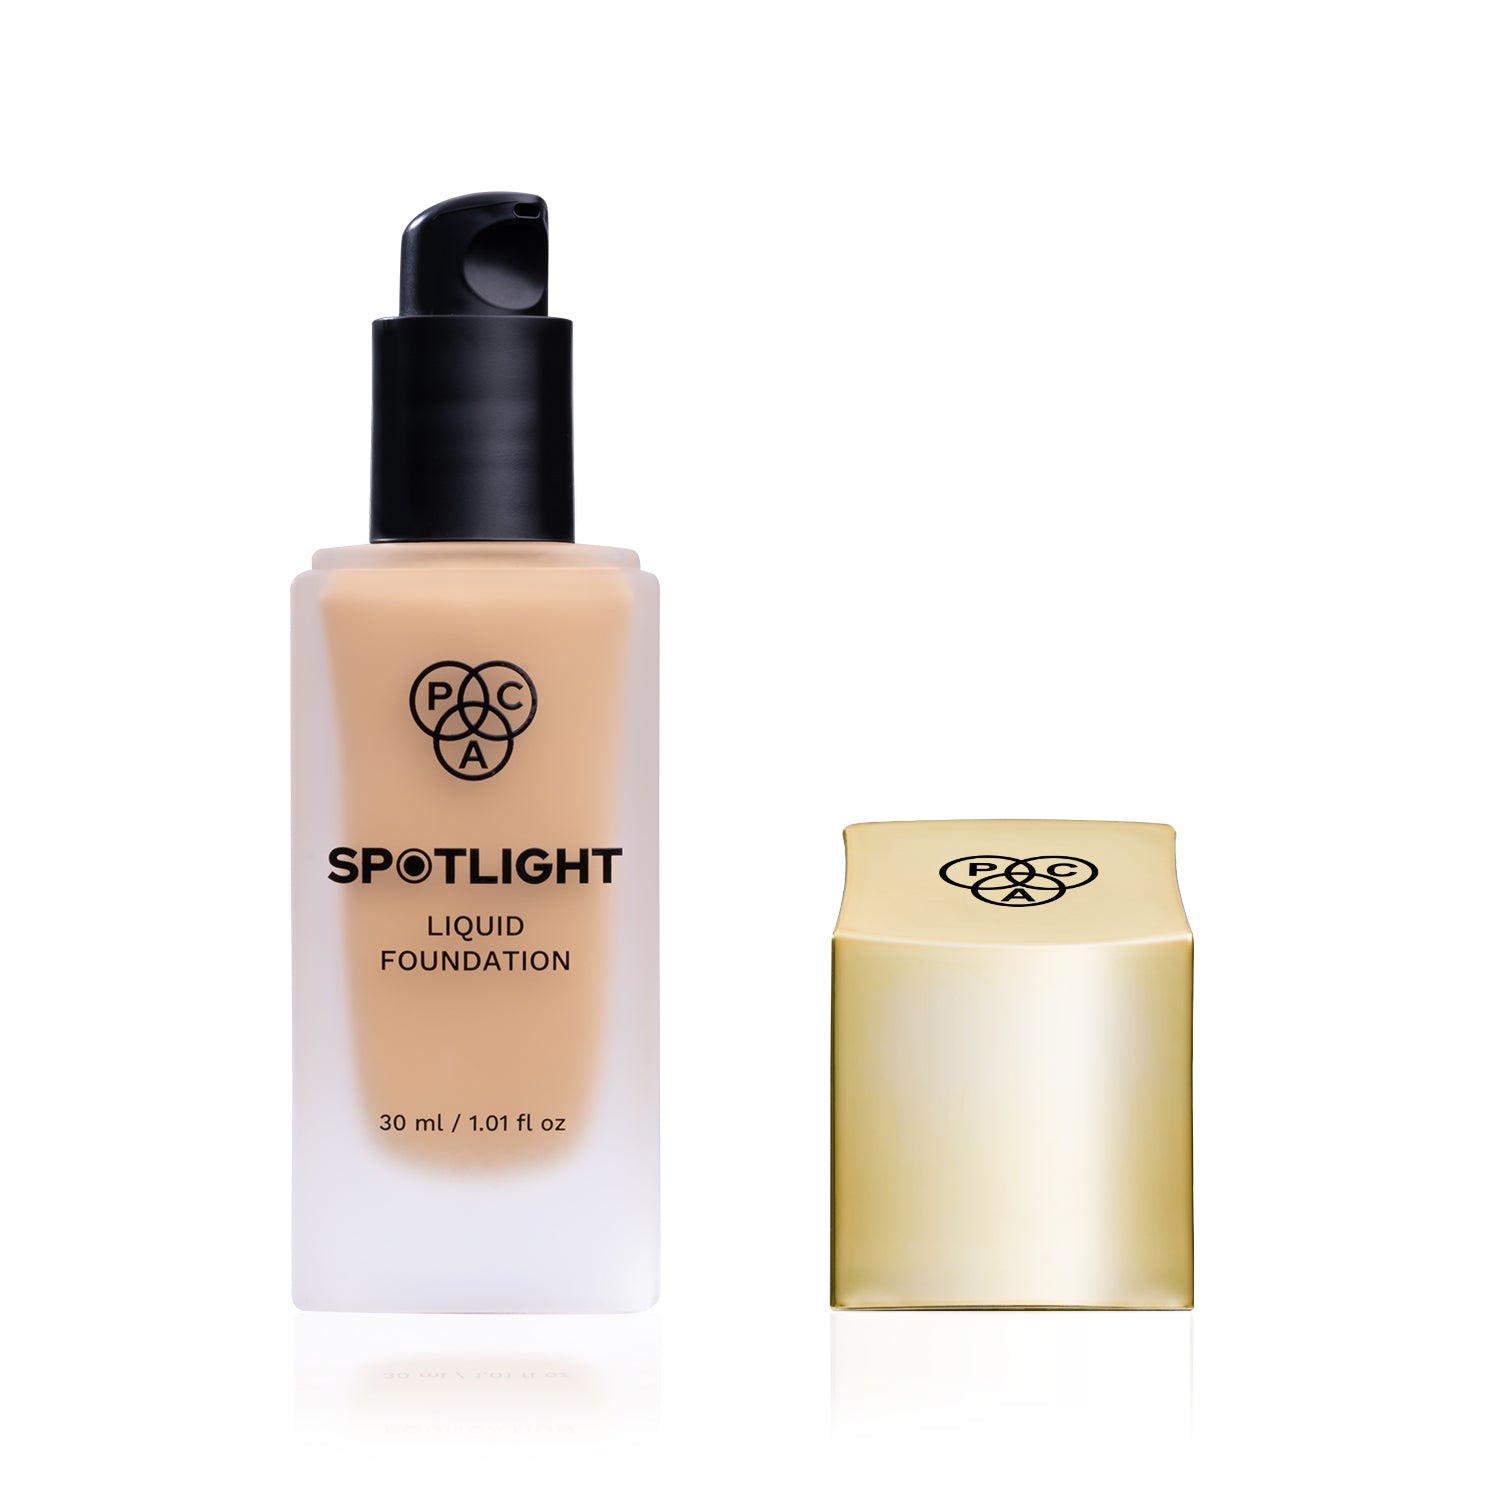 PAC Cosmetics Spotlight Liquid Foundation (30 ml) #Color_06 Custard Drizzle